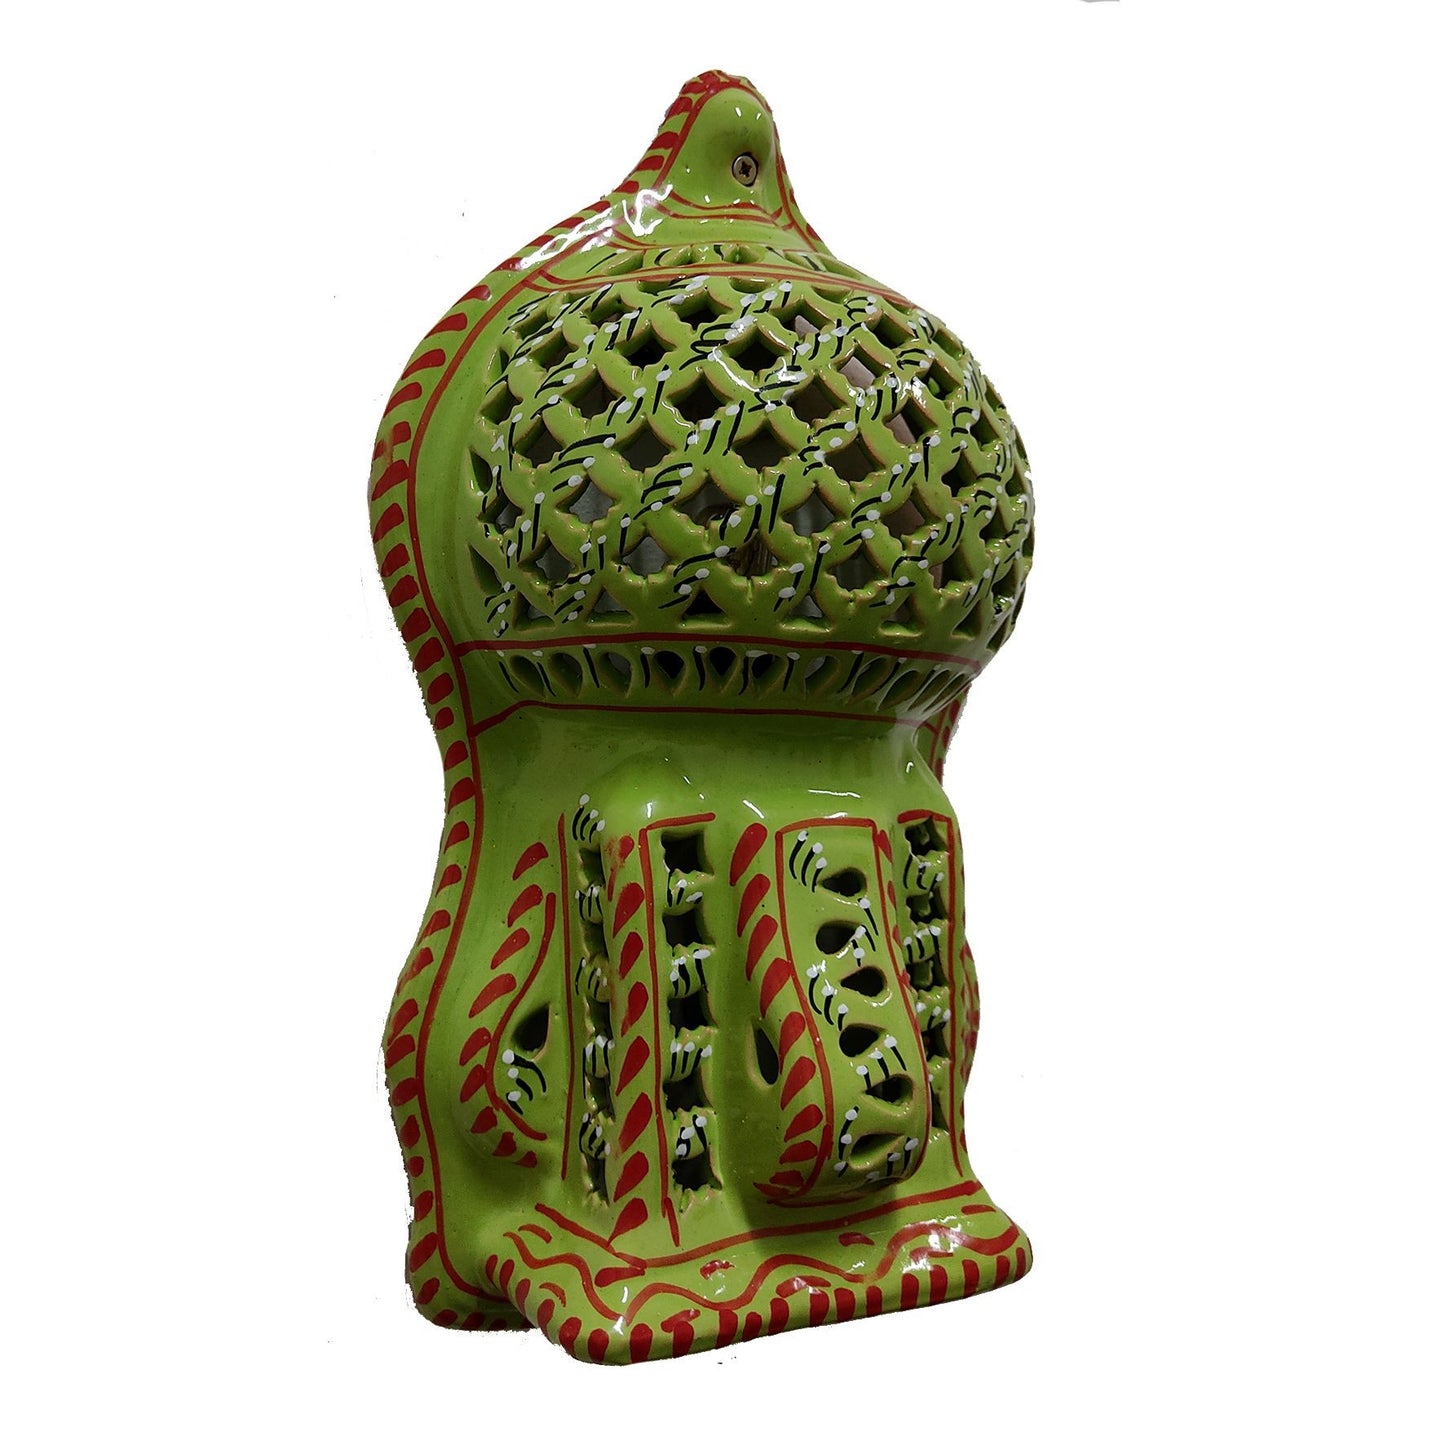 Arredo Etnico Applique Parete Lampada Terracotta Tunisina Marocchina 2207210900